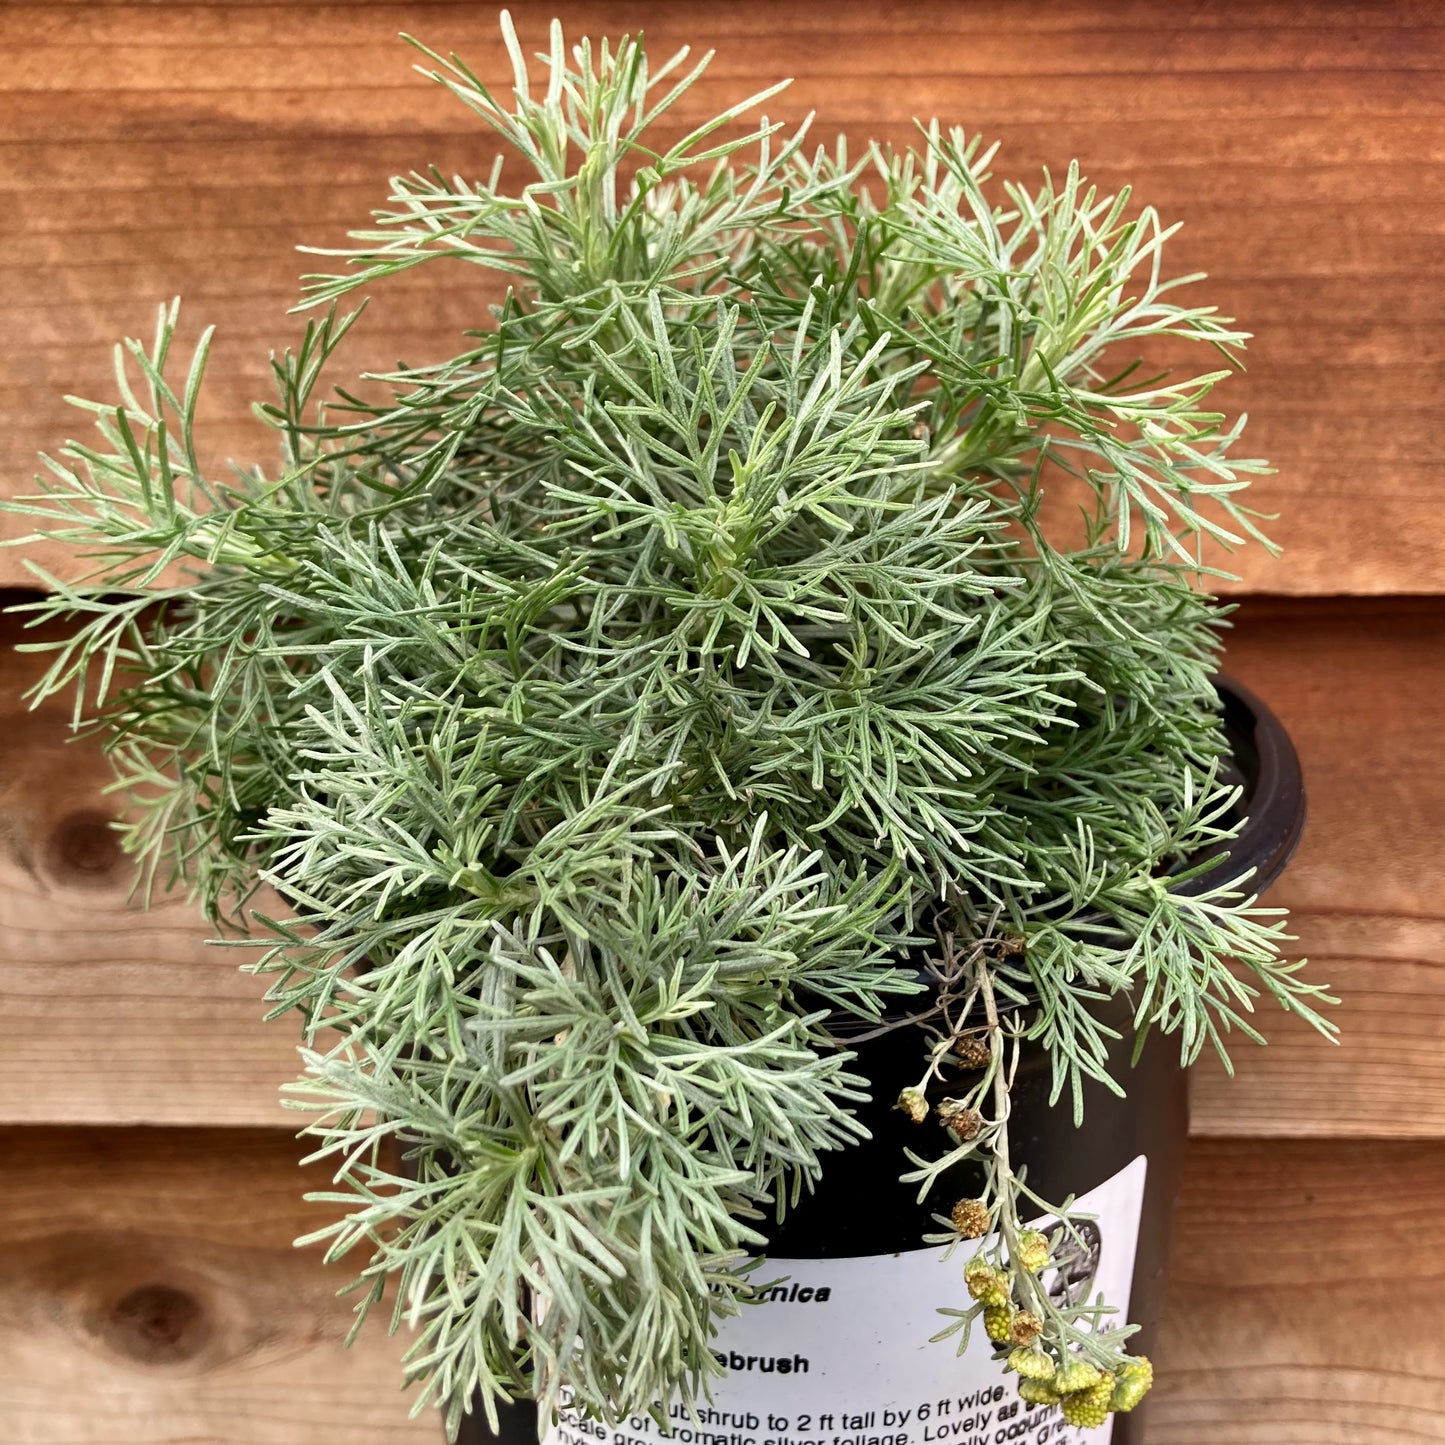 Artemisia californica 'Montara' - Montara Sagebrush